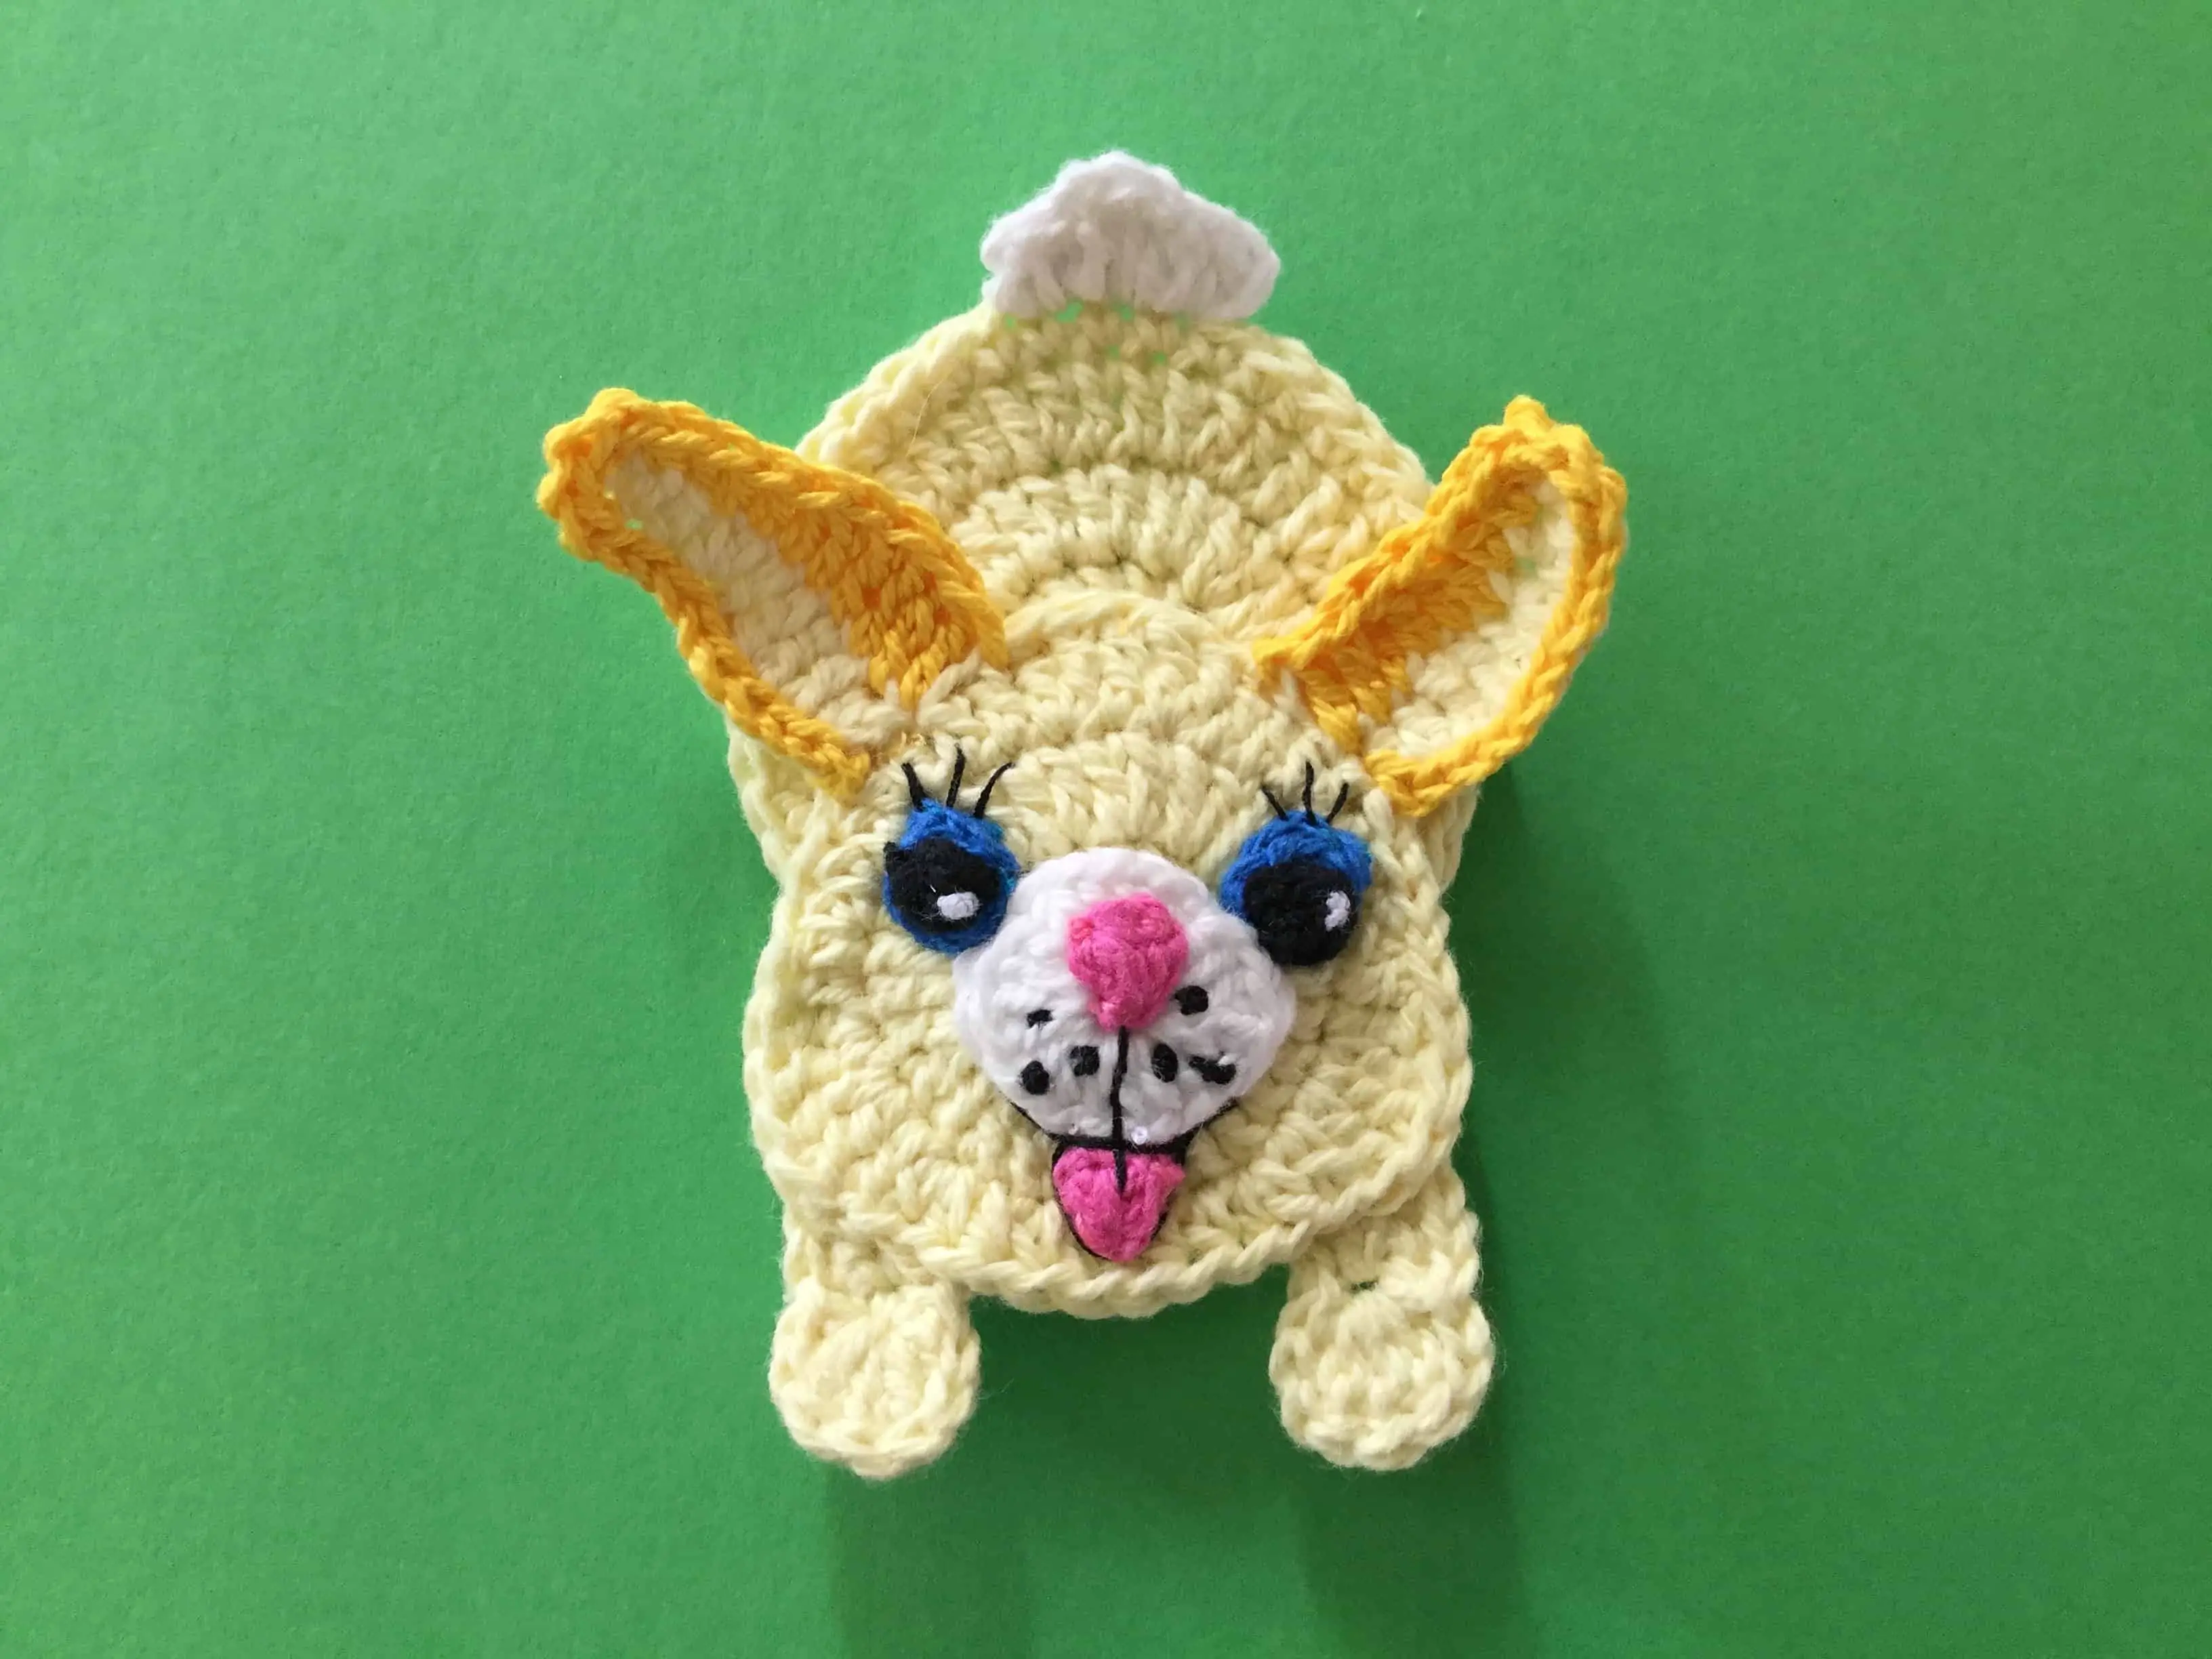 Finished crochet little rabbit landscape